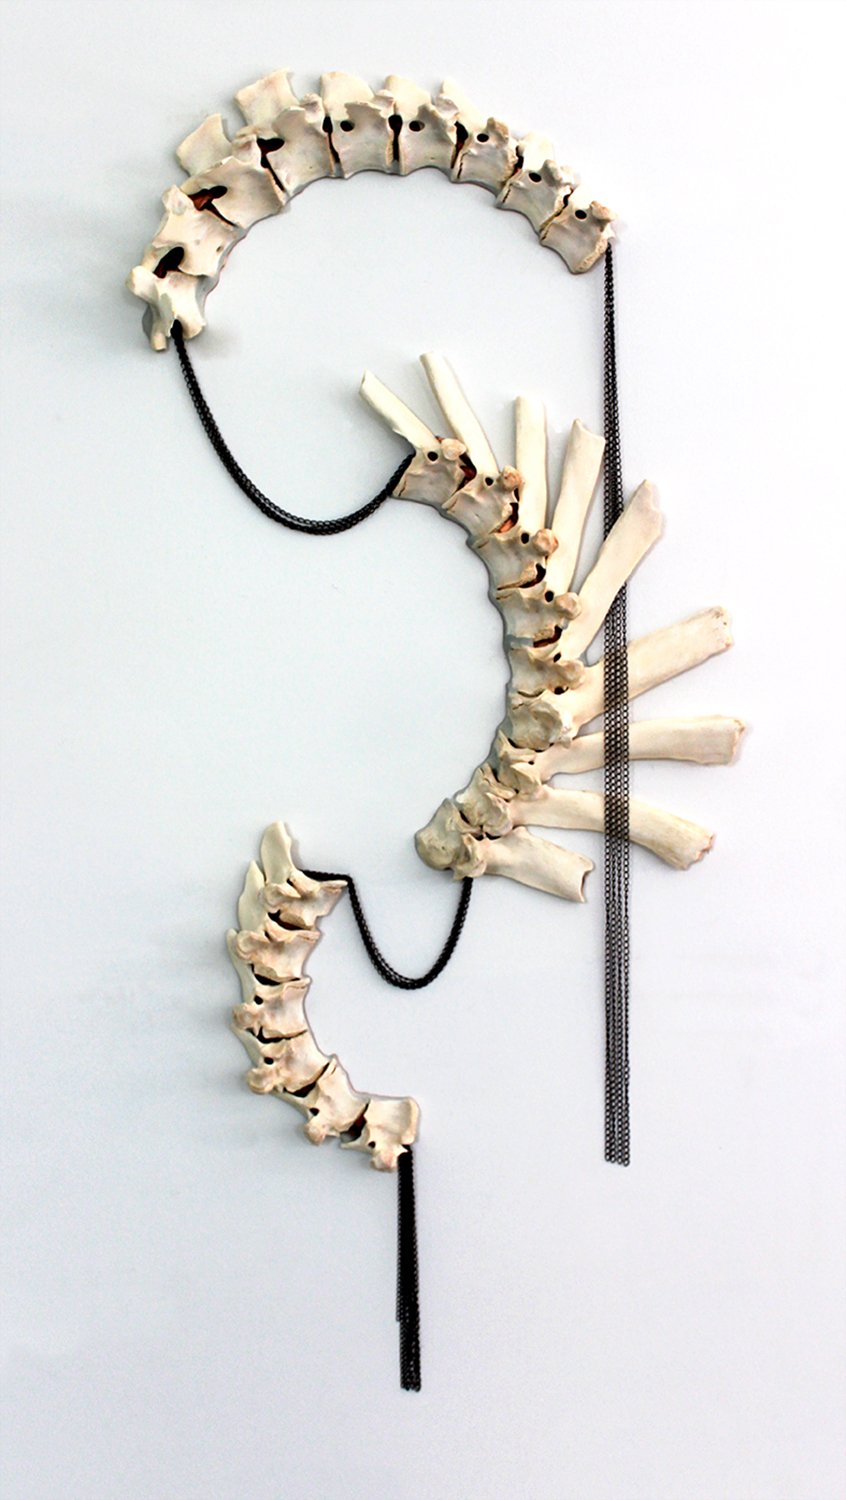    Drape of Chainged Vertebrae    Cow vertebrae, copper sheet, chain, 52"h x 24"w x 6"d 